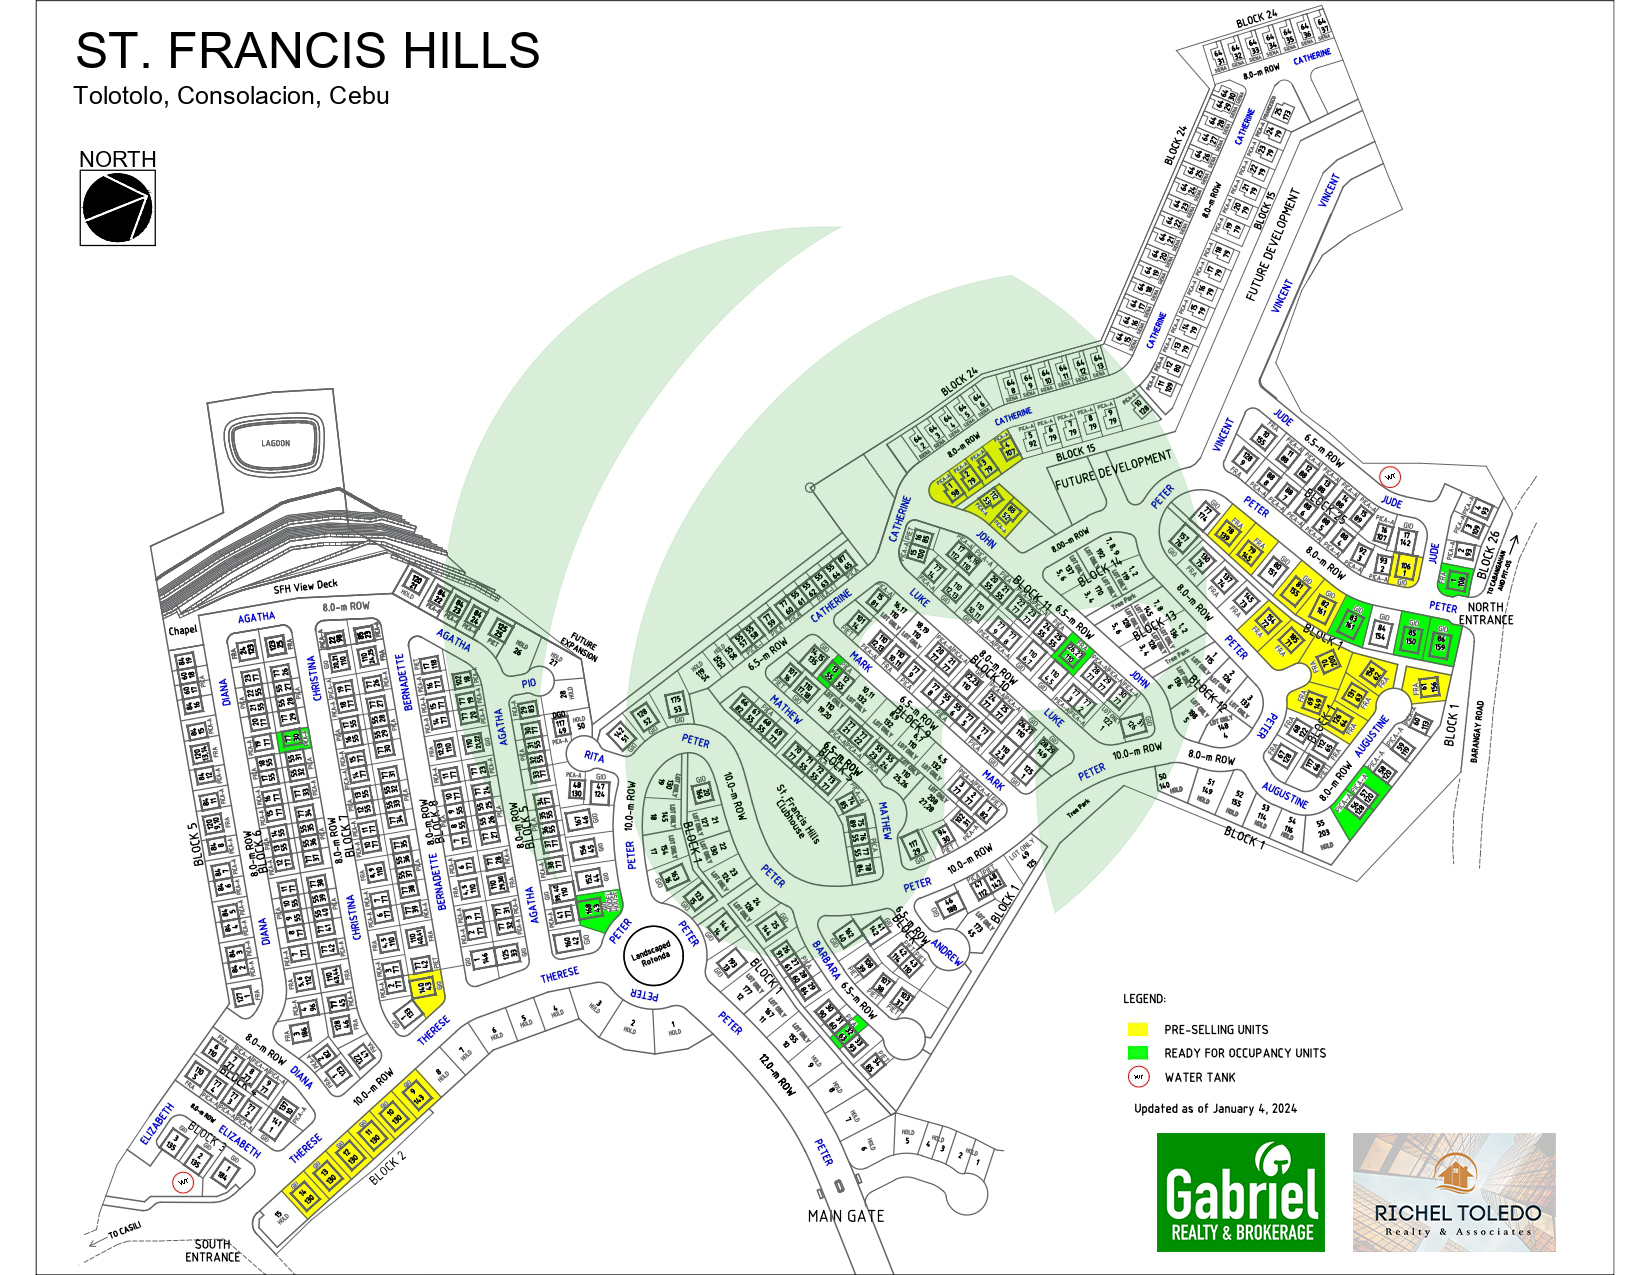 St. Francis Hills Site Development Plan